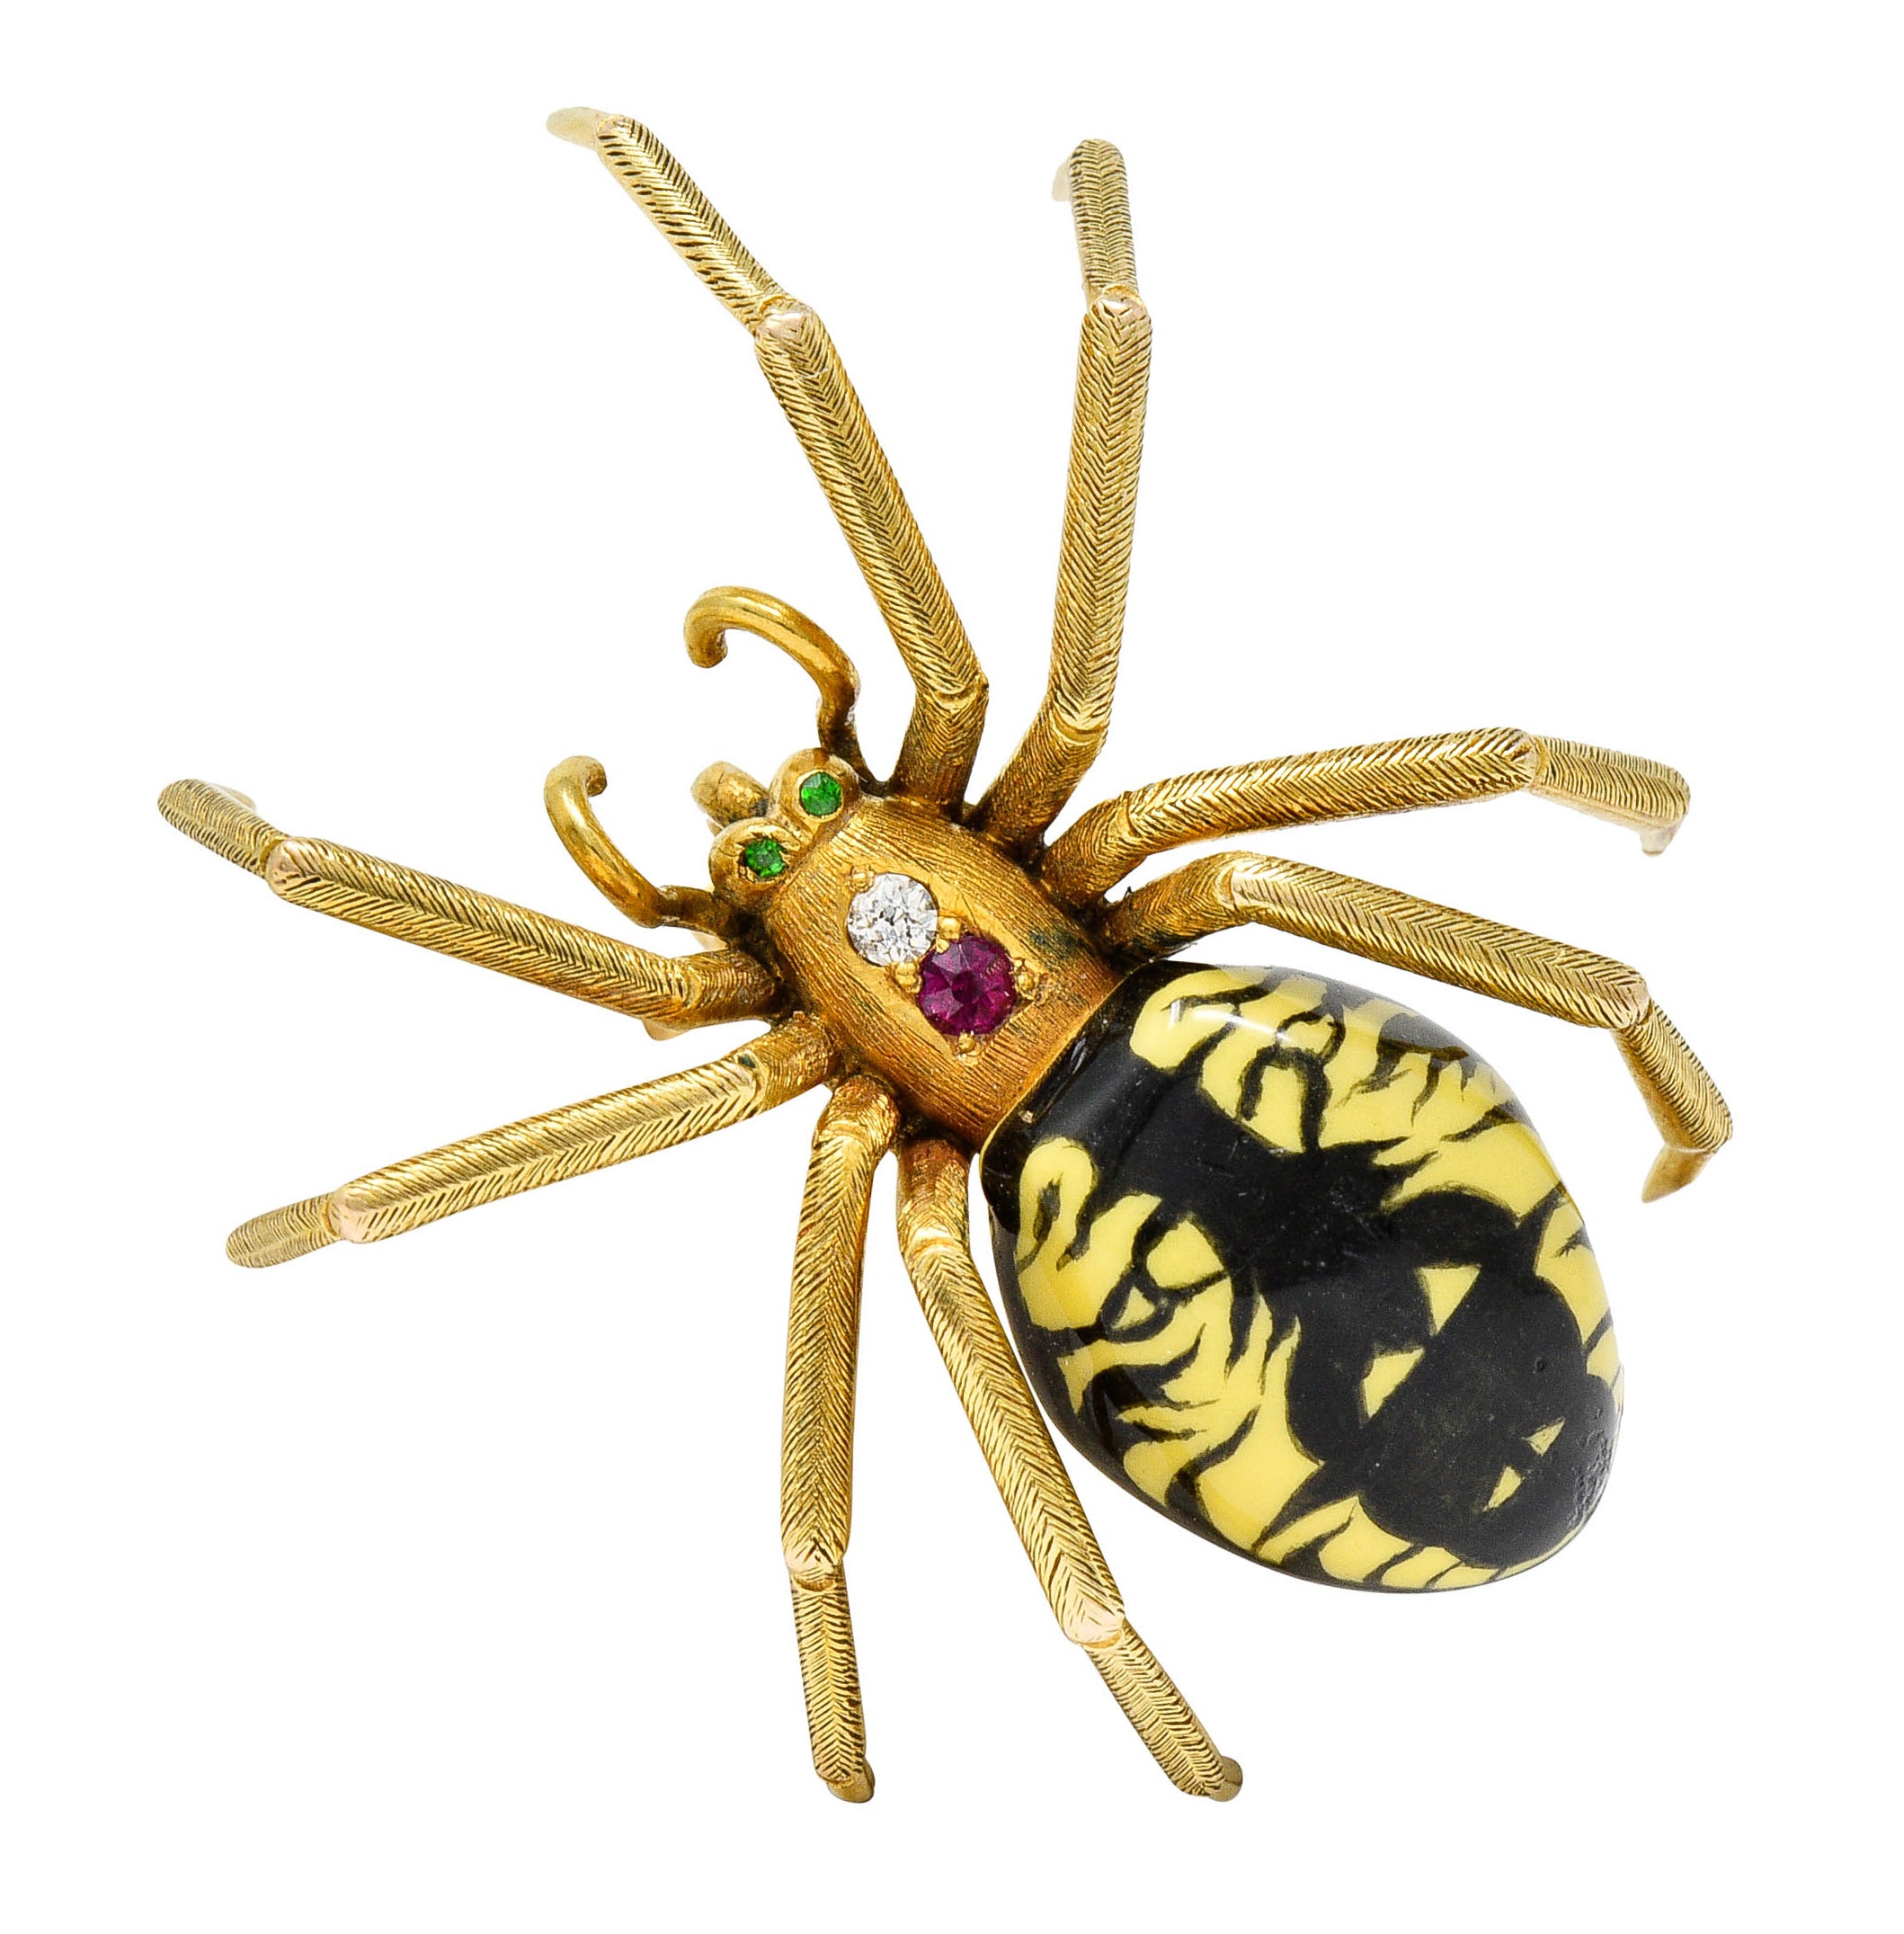 Gemcrafts India 14K Gold Spider Brooch